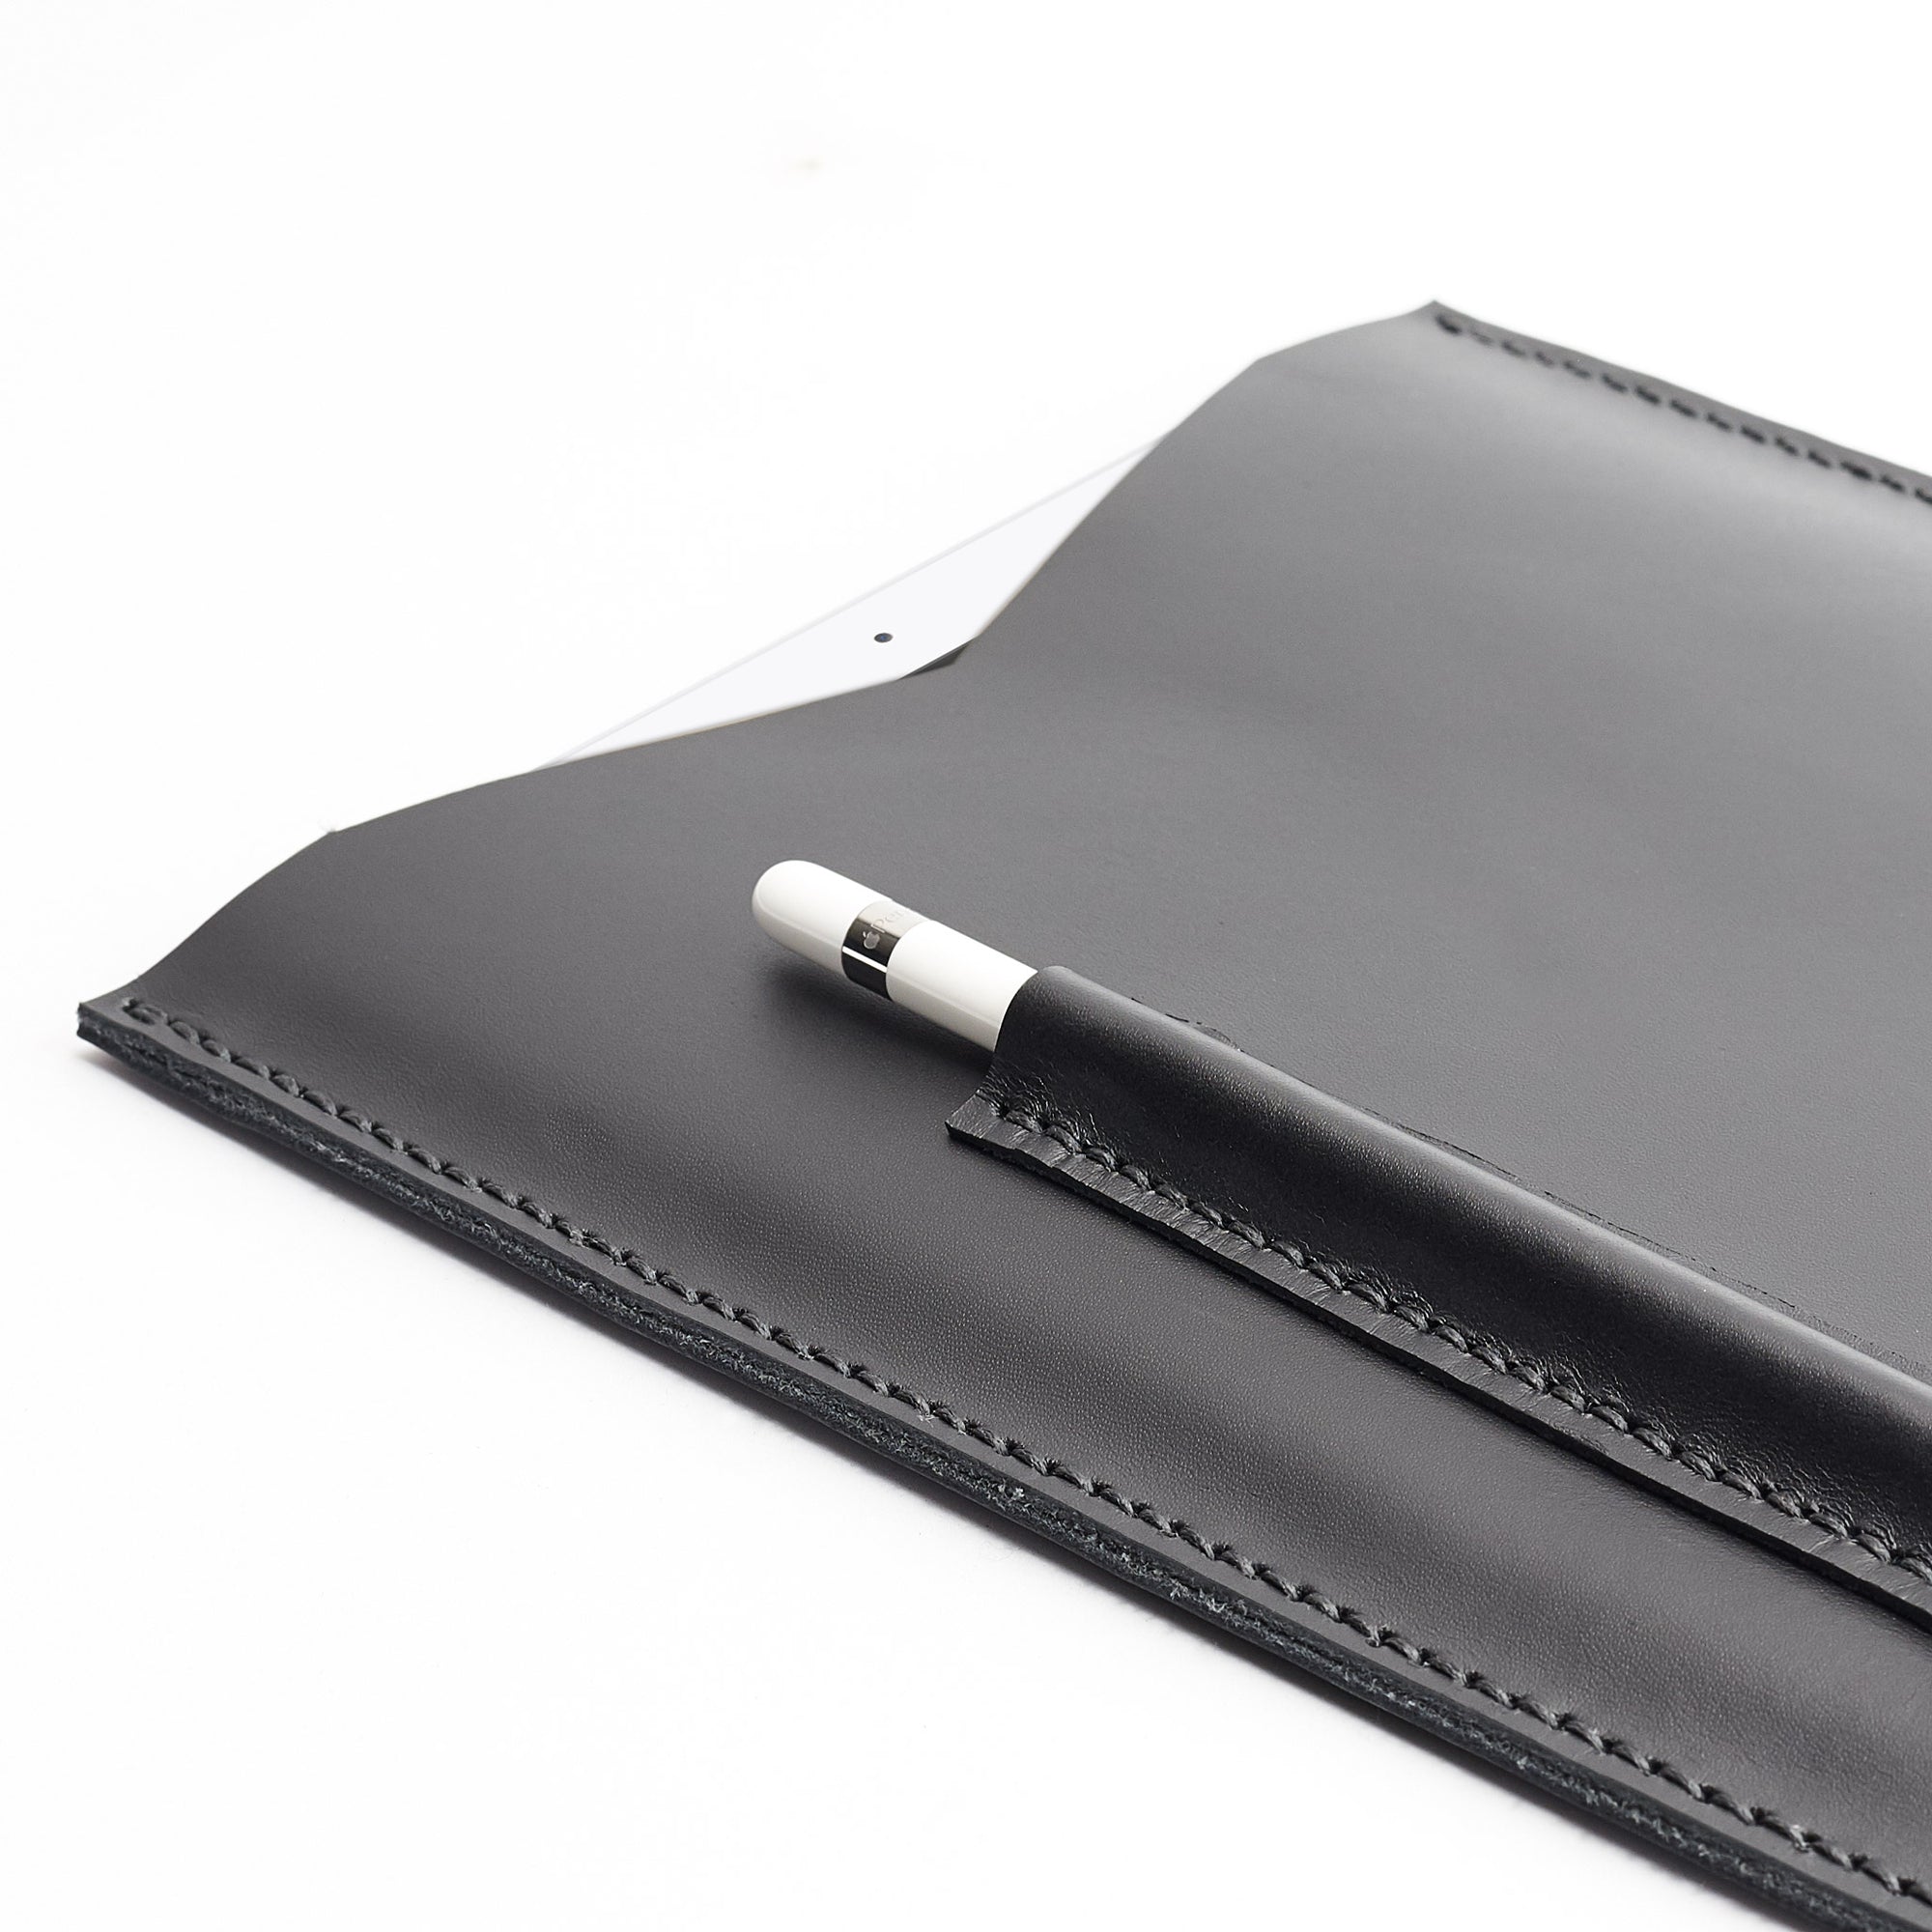 Detail. Capra Leather iPad pro leather sleeve. Black leather sleeve for iPad pro 10.5 inch 12.9 inch. Mens gifts